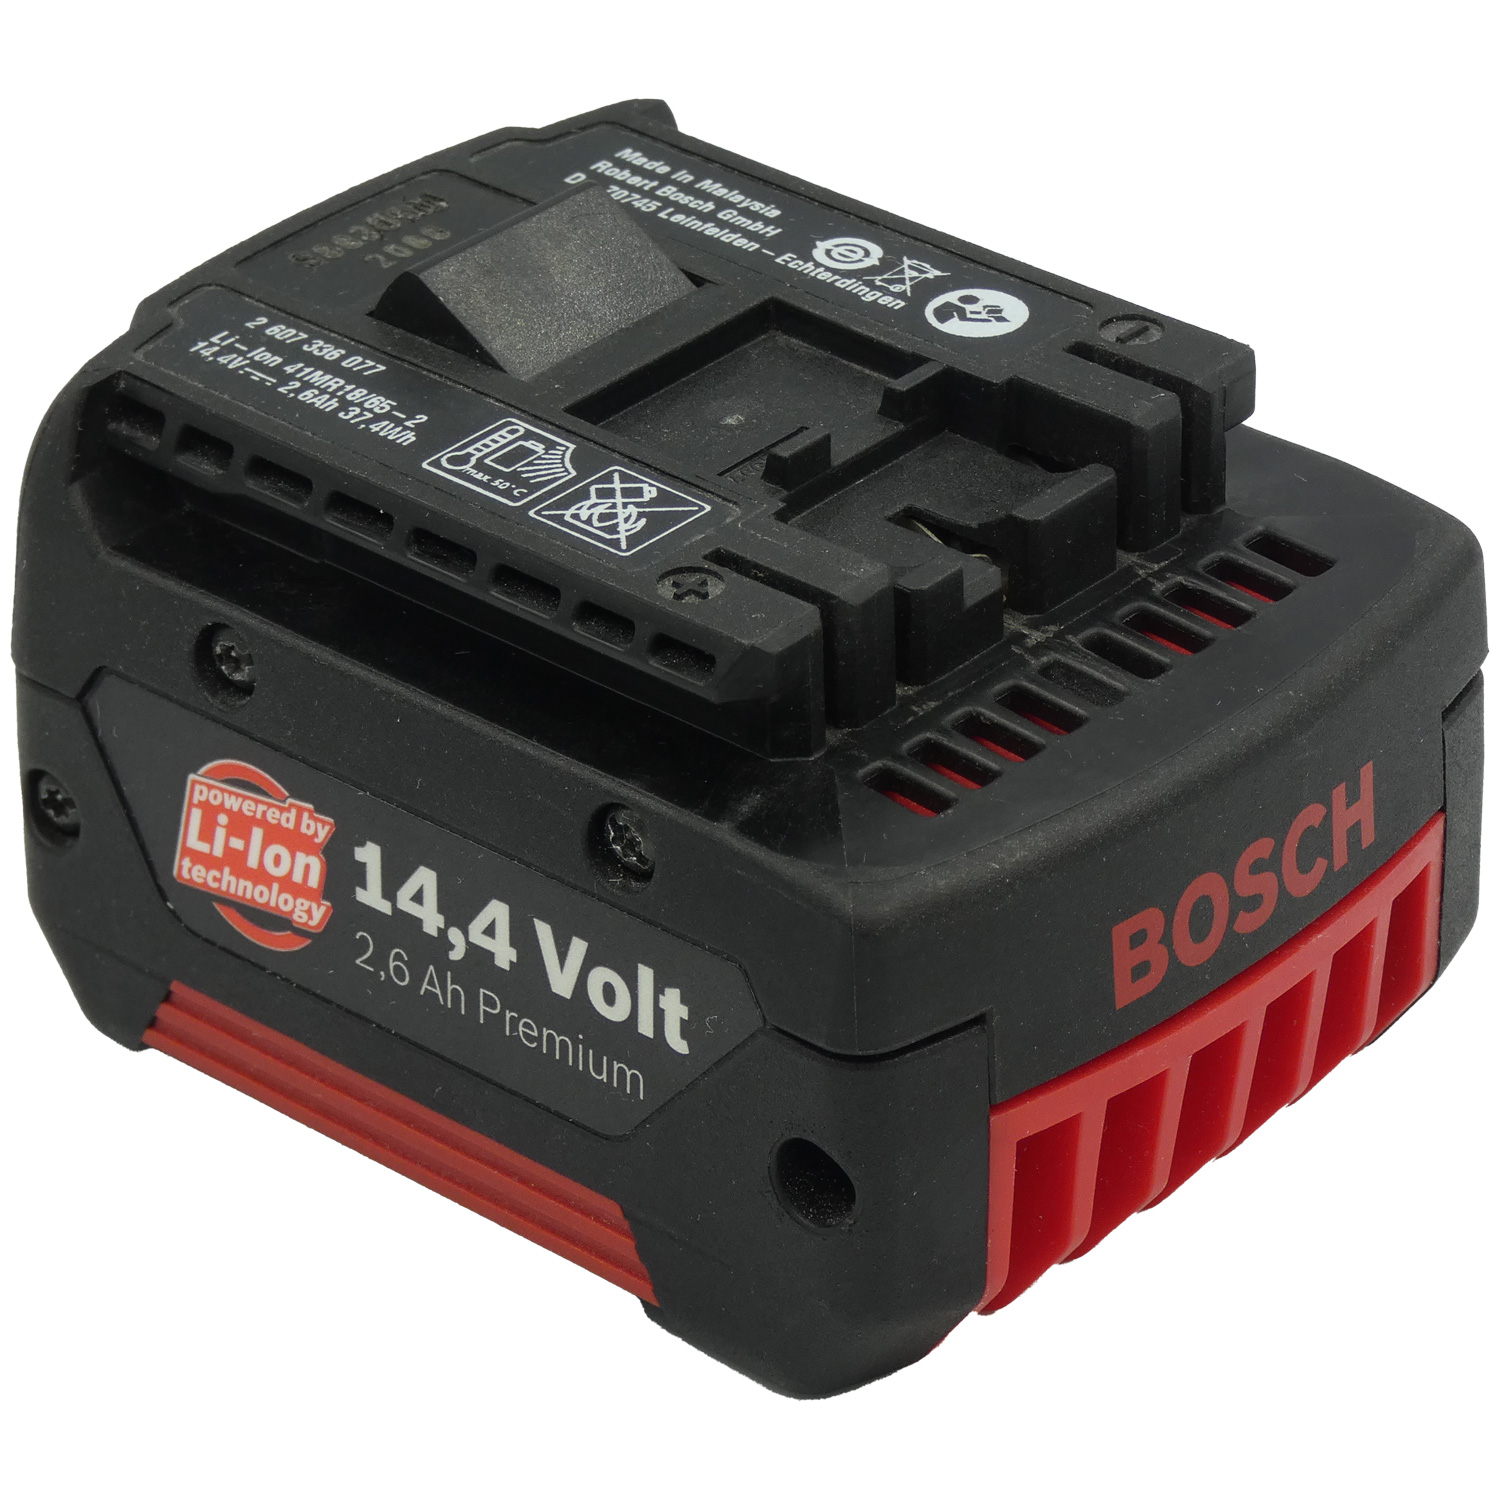 Test: Bosch Professional 2607336078 Akku 14,4V Li-Ion 2,6Ah Einschubakku